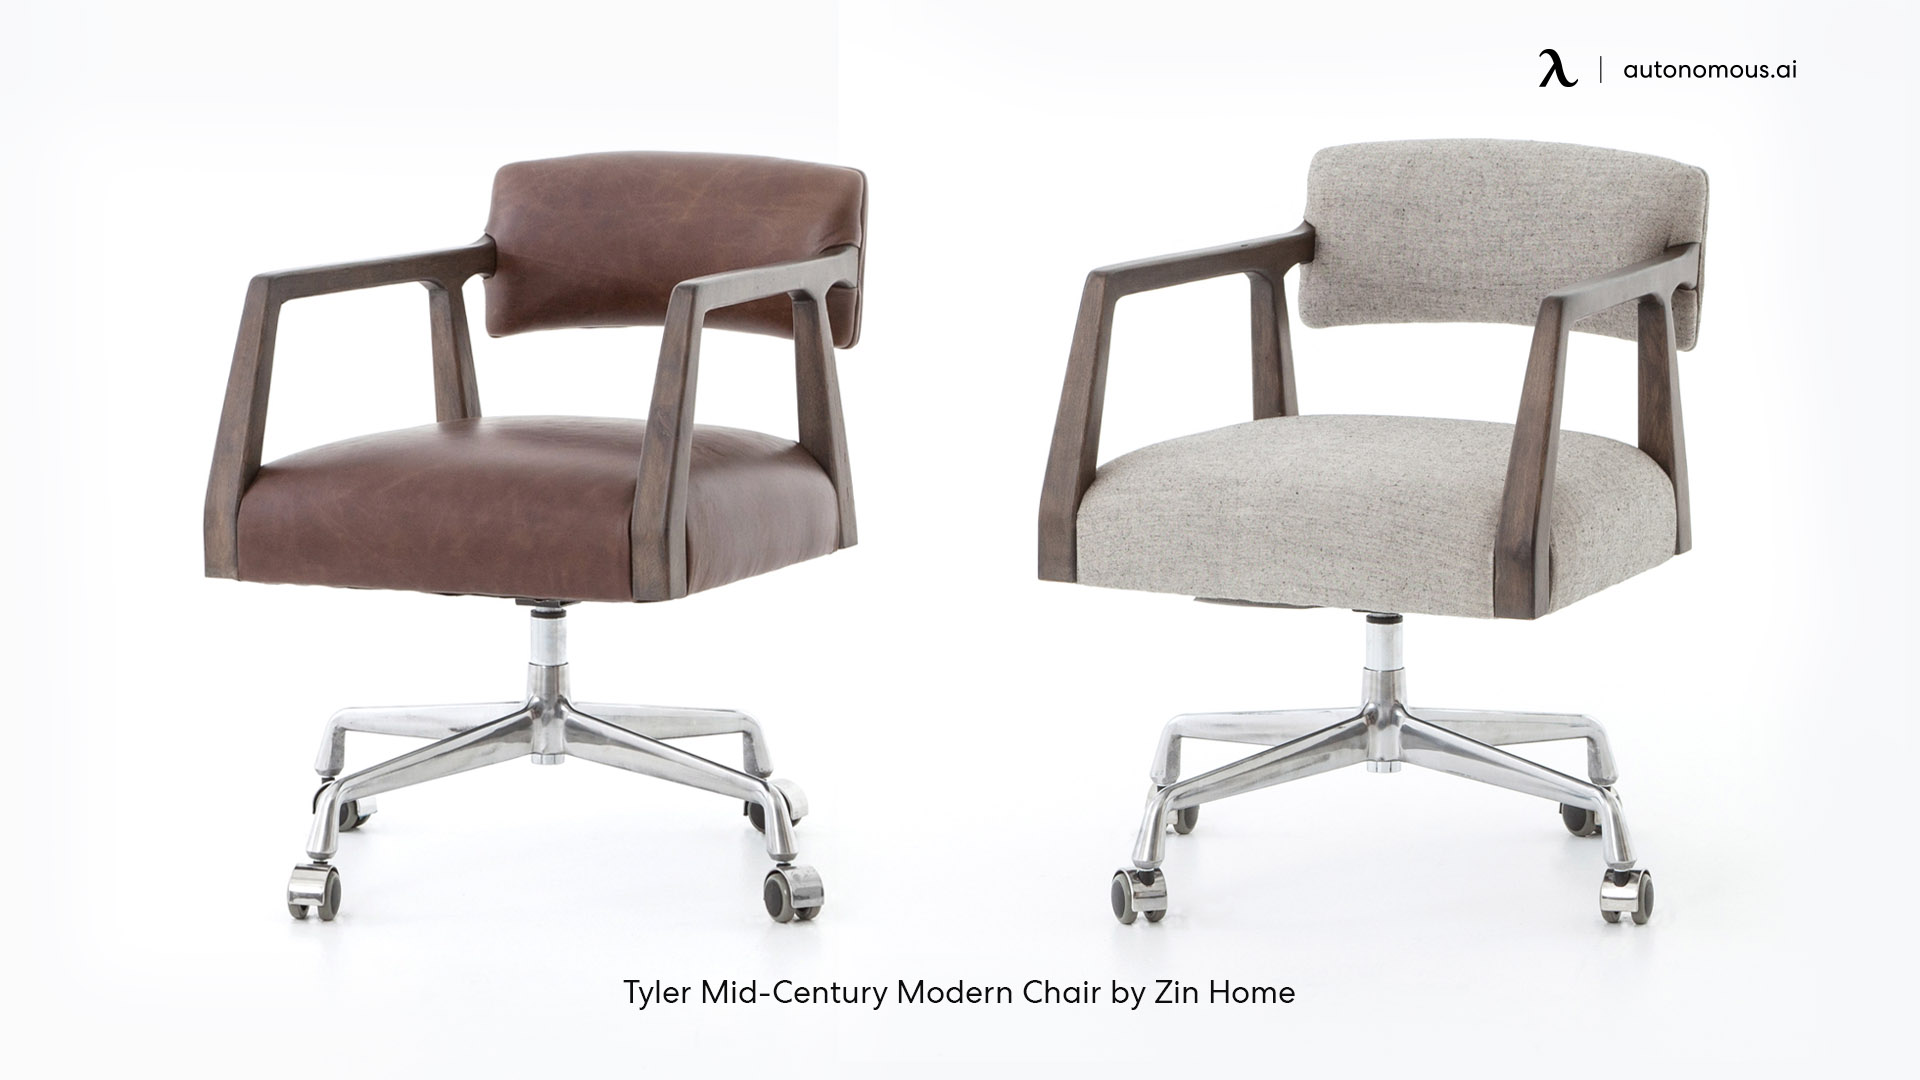 Tyler Mid-Century Modern Chair by Zin Home